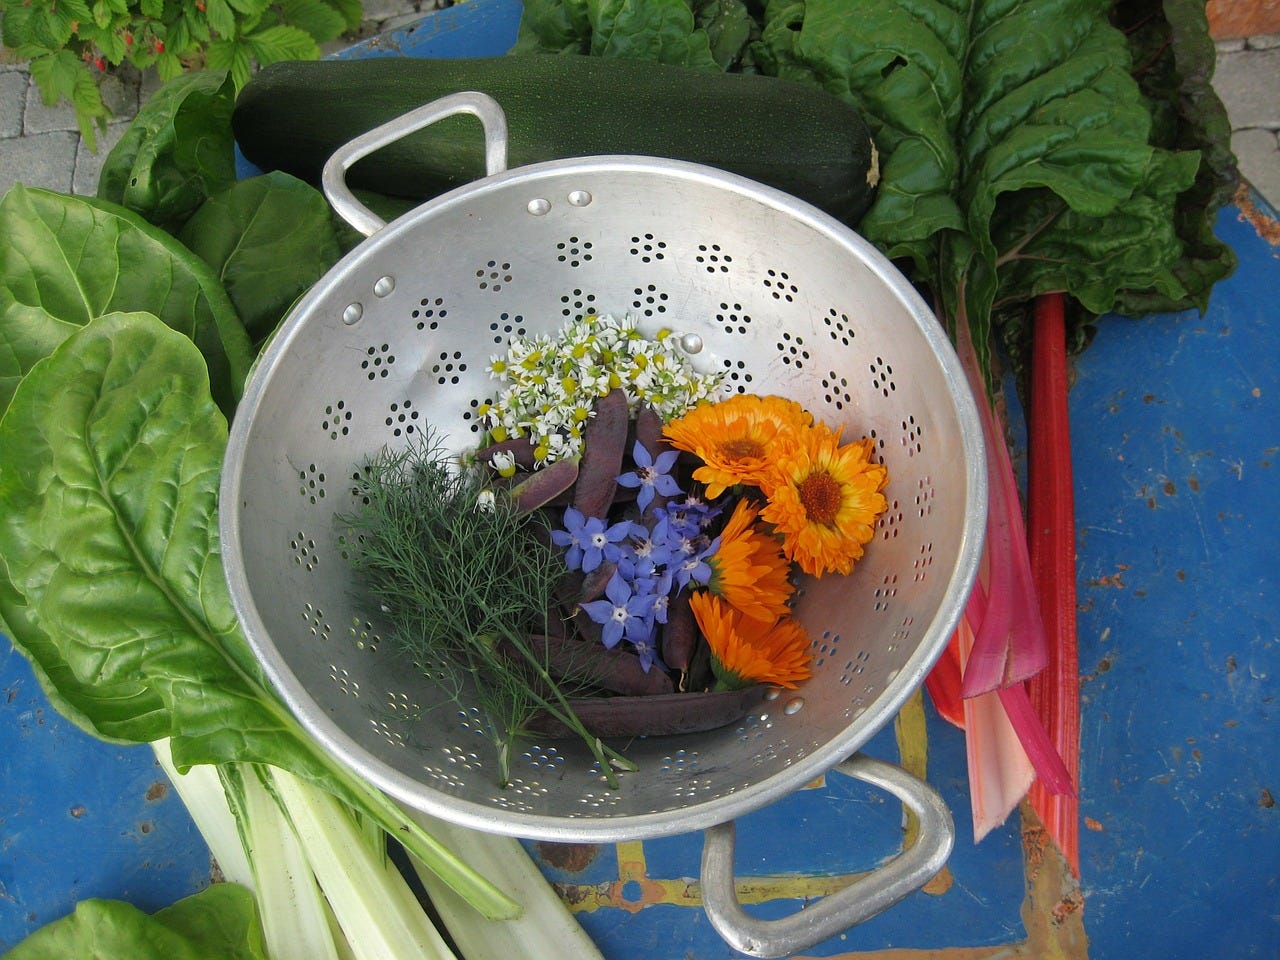 bowl,metal bowl,salad bowl,harvest,vegetables,herbs,flowers,garden,healthy